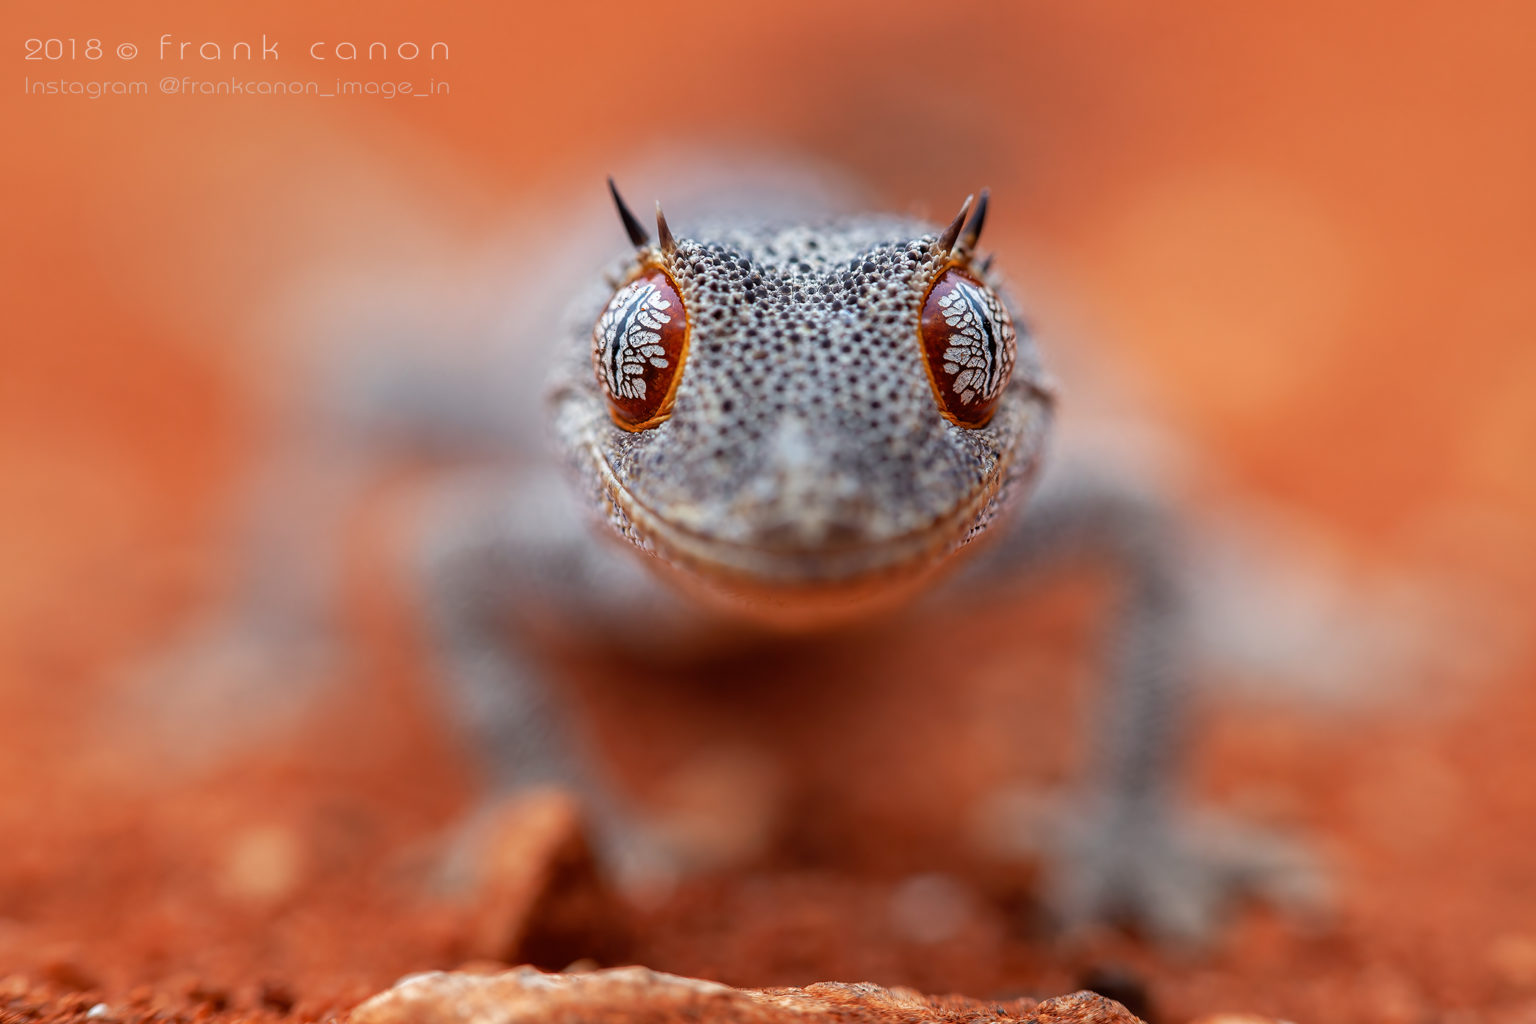 Strophurus ciliaris aberrans - "Northern Spiny-Tailed Gecko"